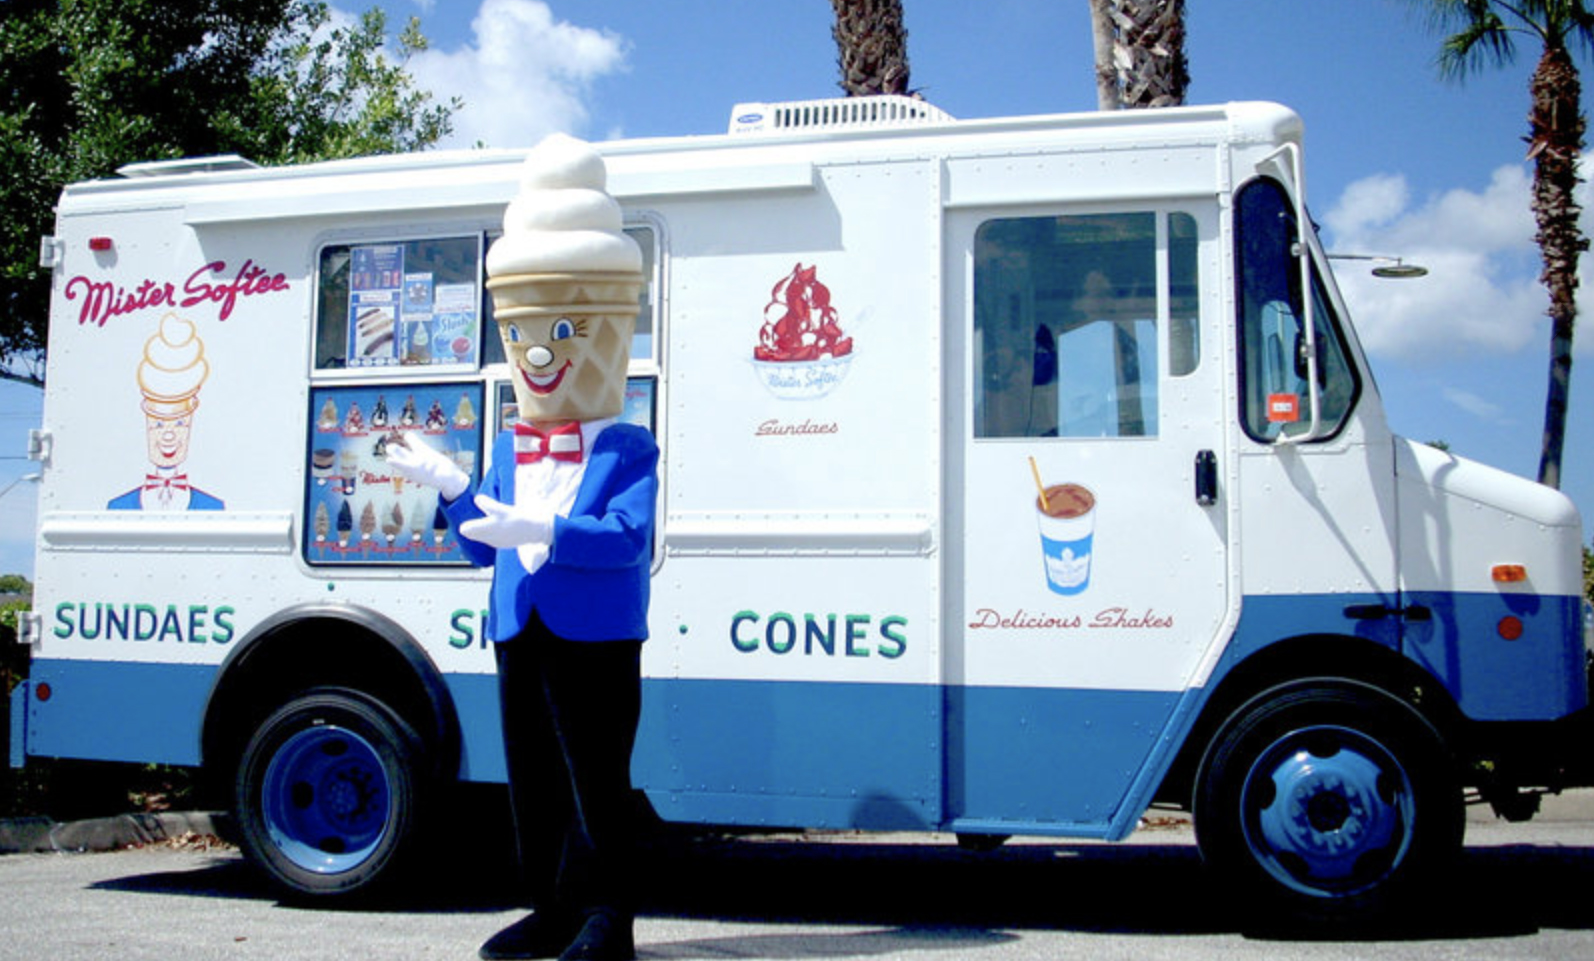 Mister Softee brings ice cream joy to all!